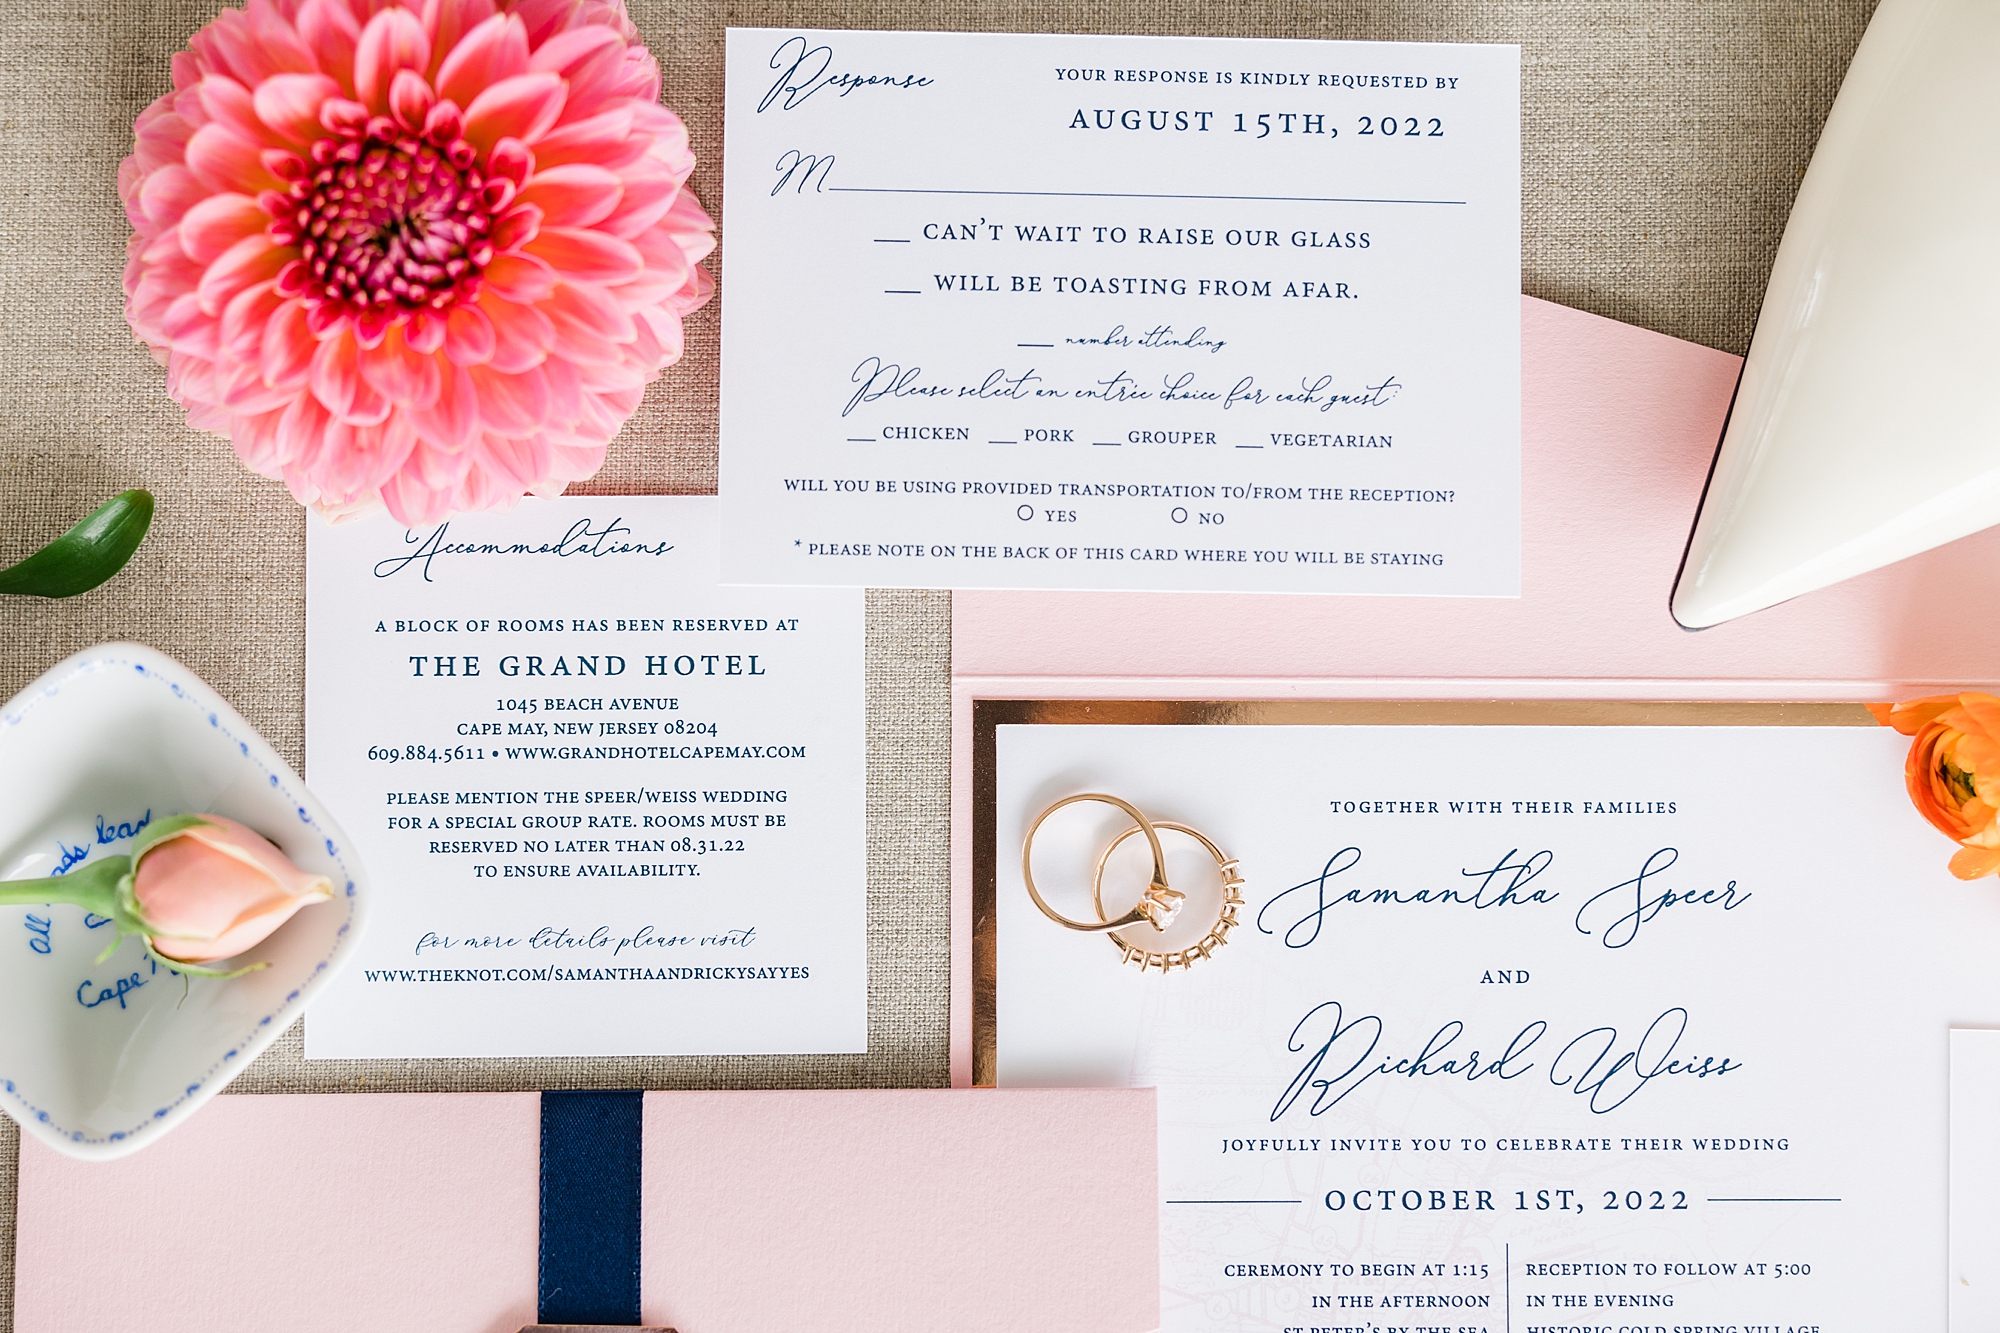 beautiful wedding invitation flat lay design 